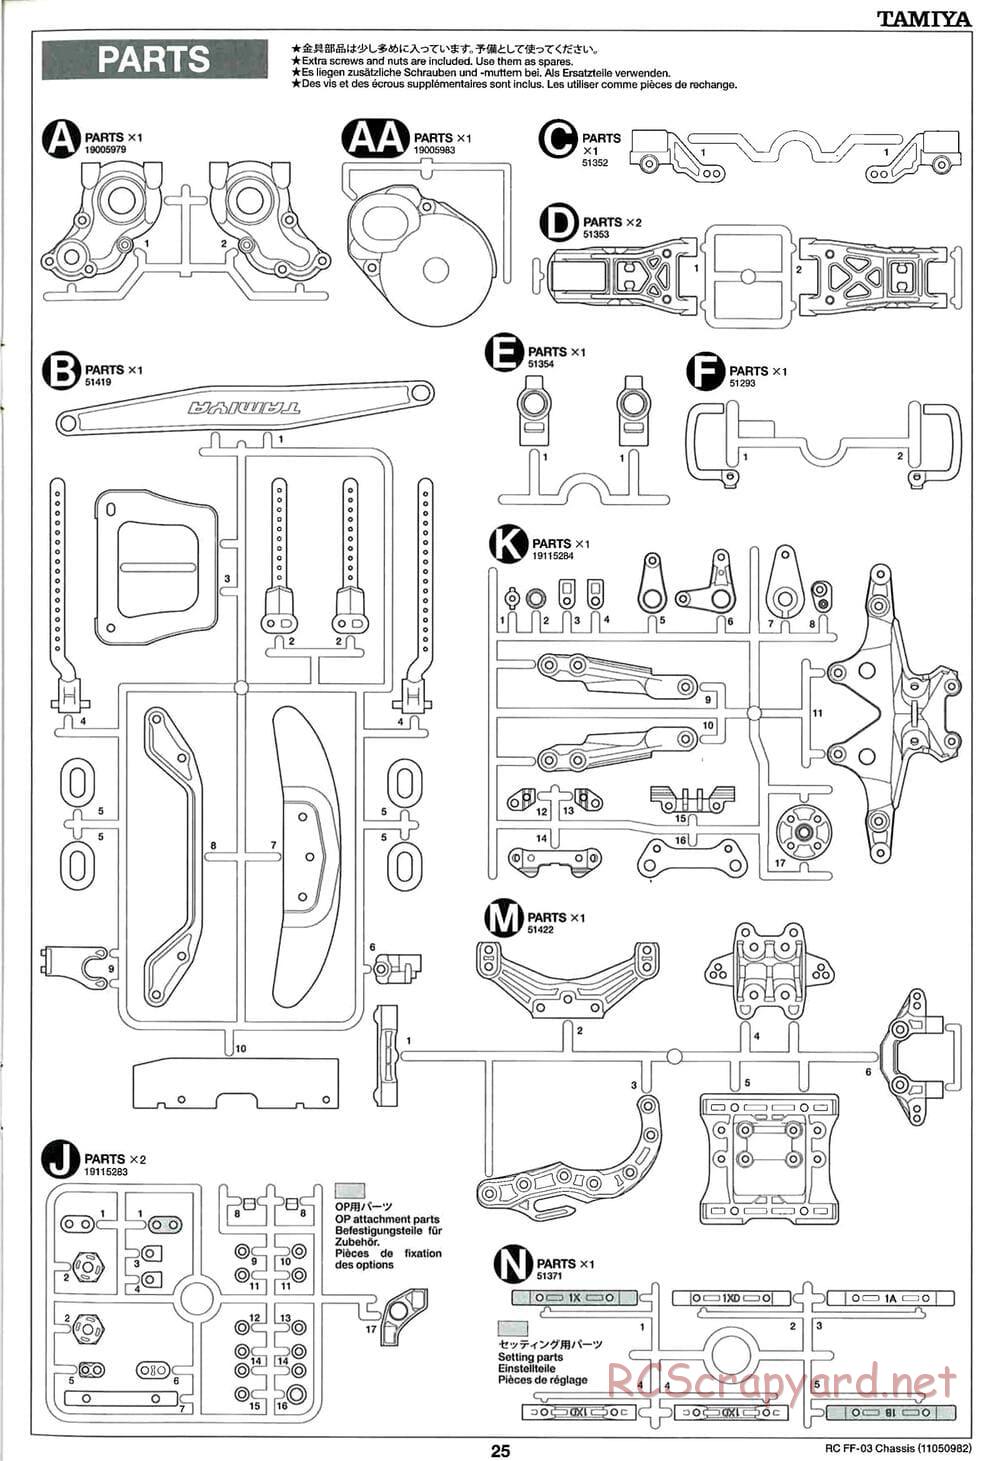 Tamiya - FF-03 Chassis - Manual - Page 25